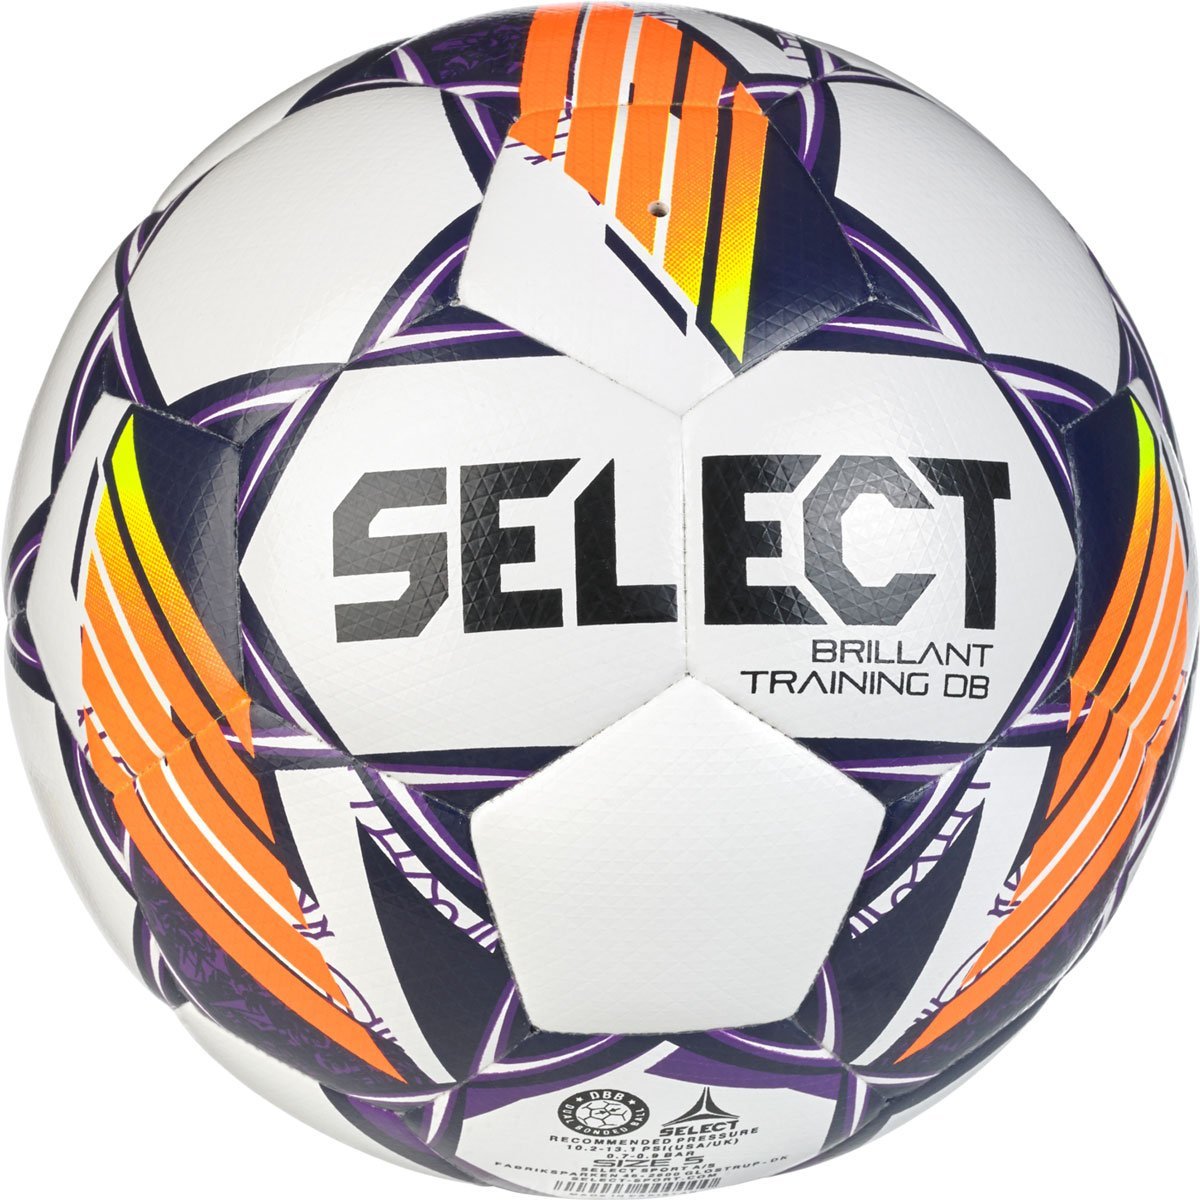 Select Brillant Training DB v24 Fodbold thumbnail